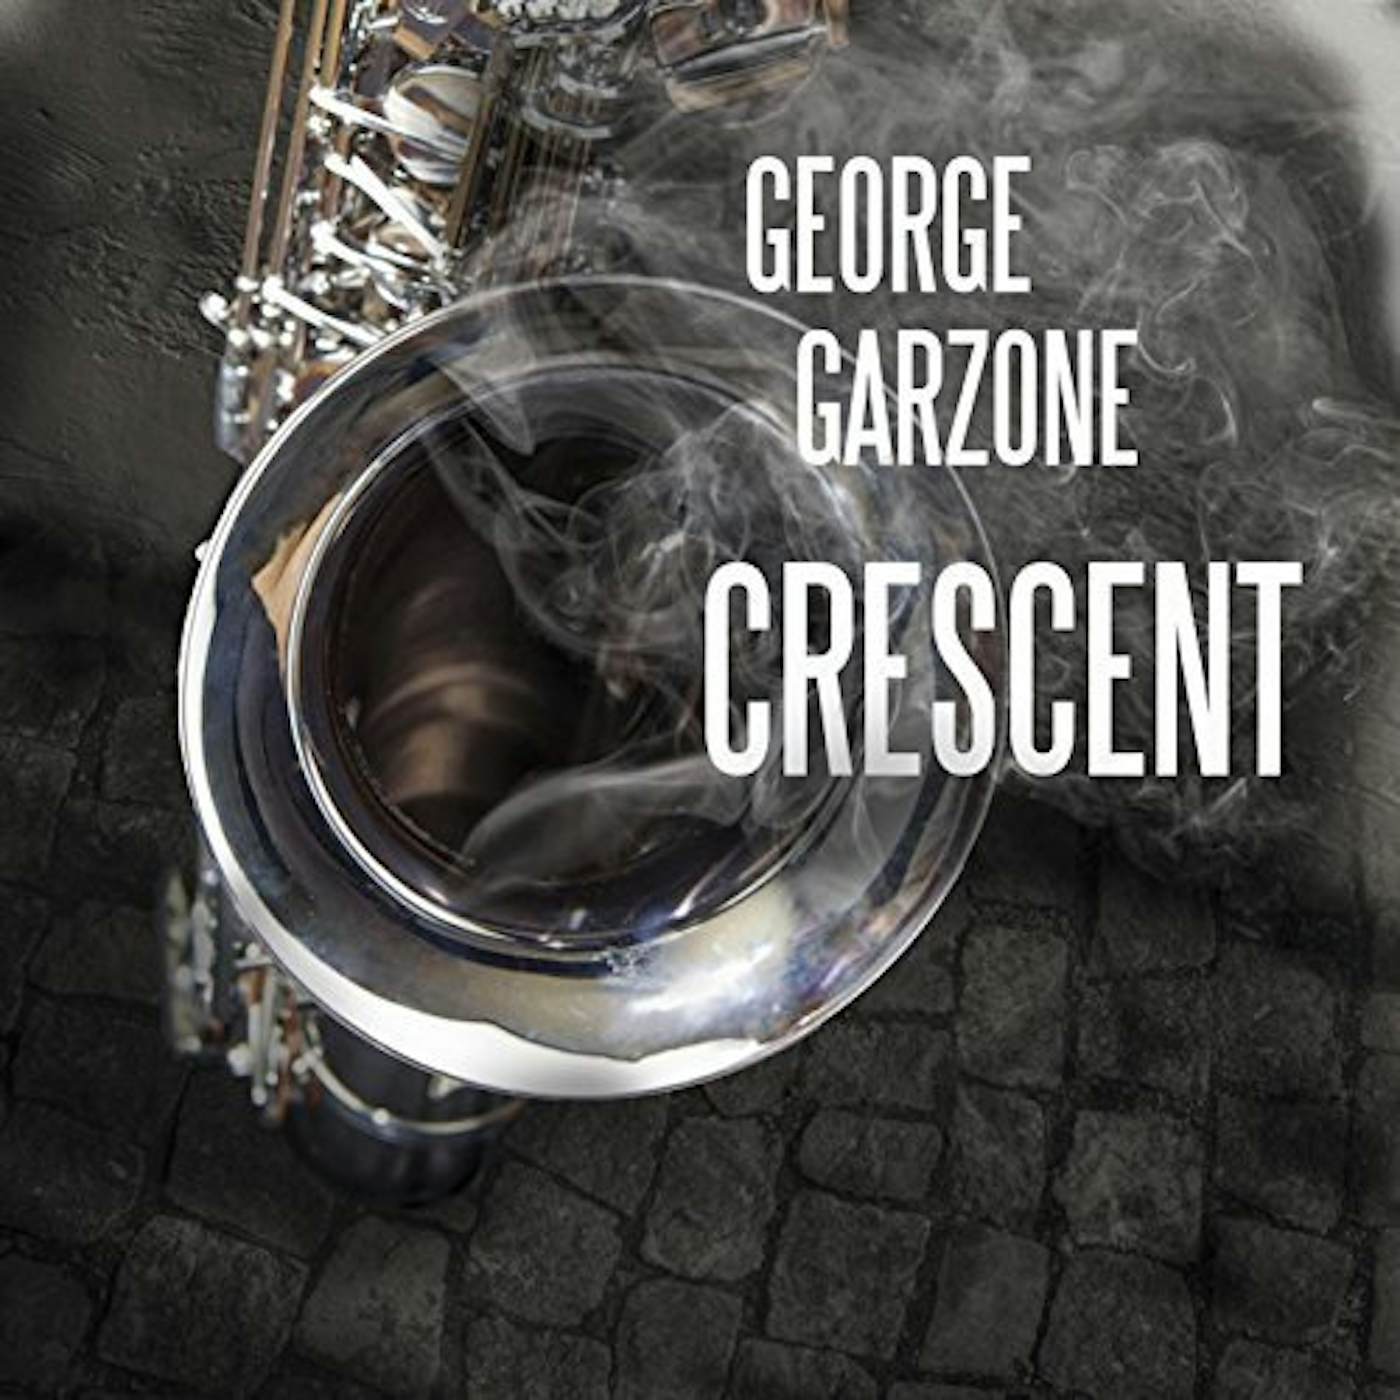 George Garzone CRESCENT CD